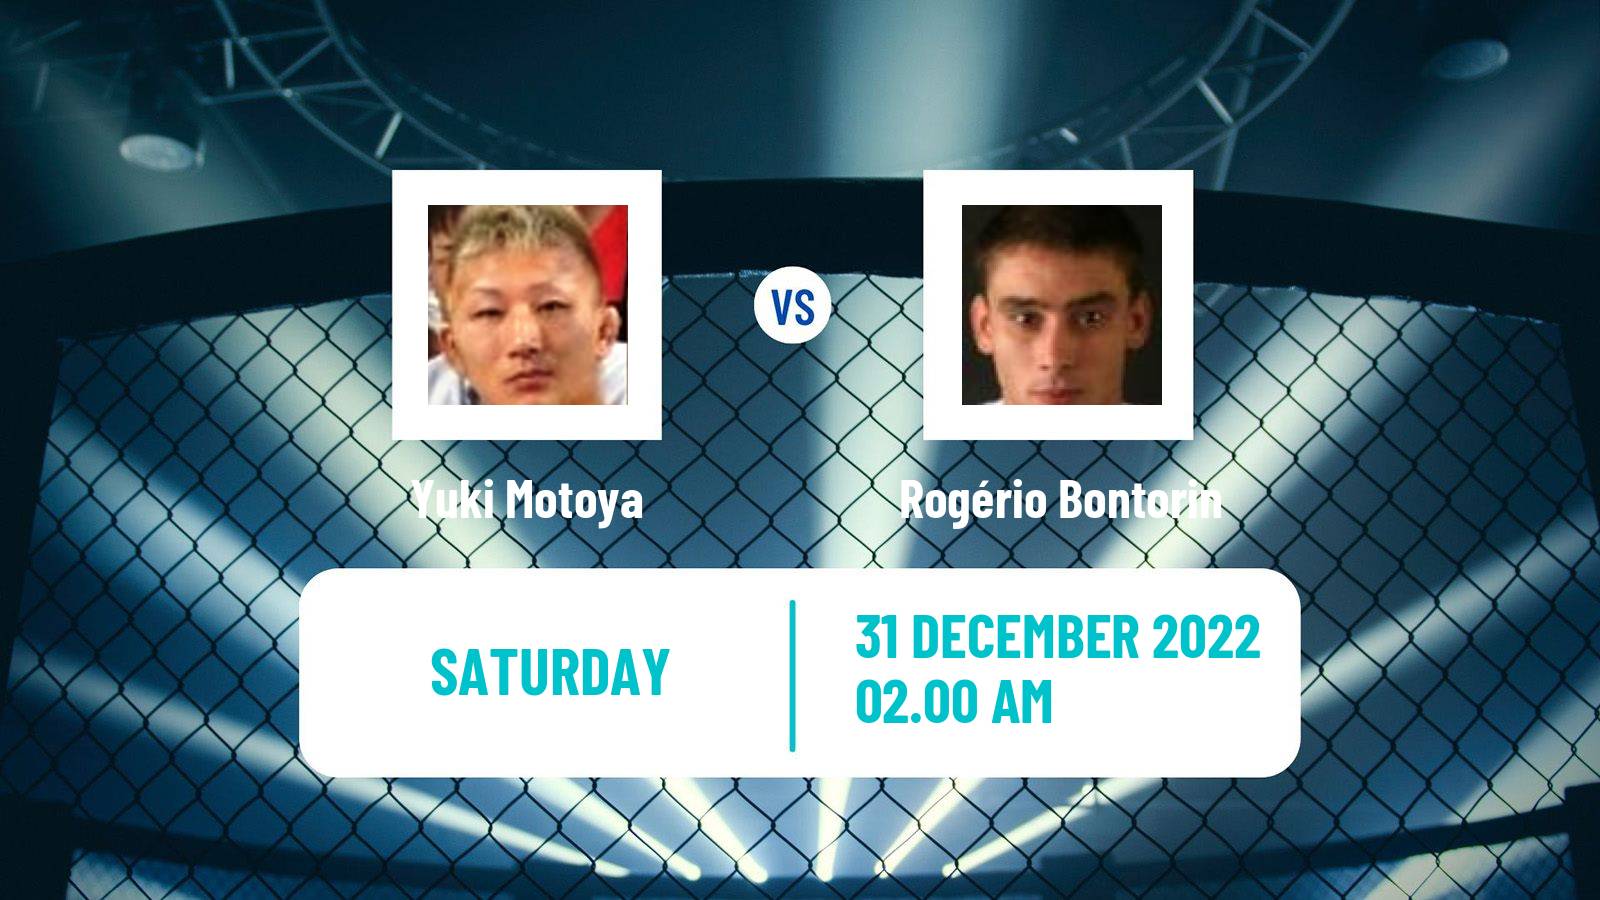 MMA MMA Yuki Motoya - Rogério Bontorin